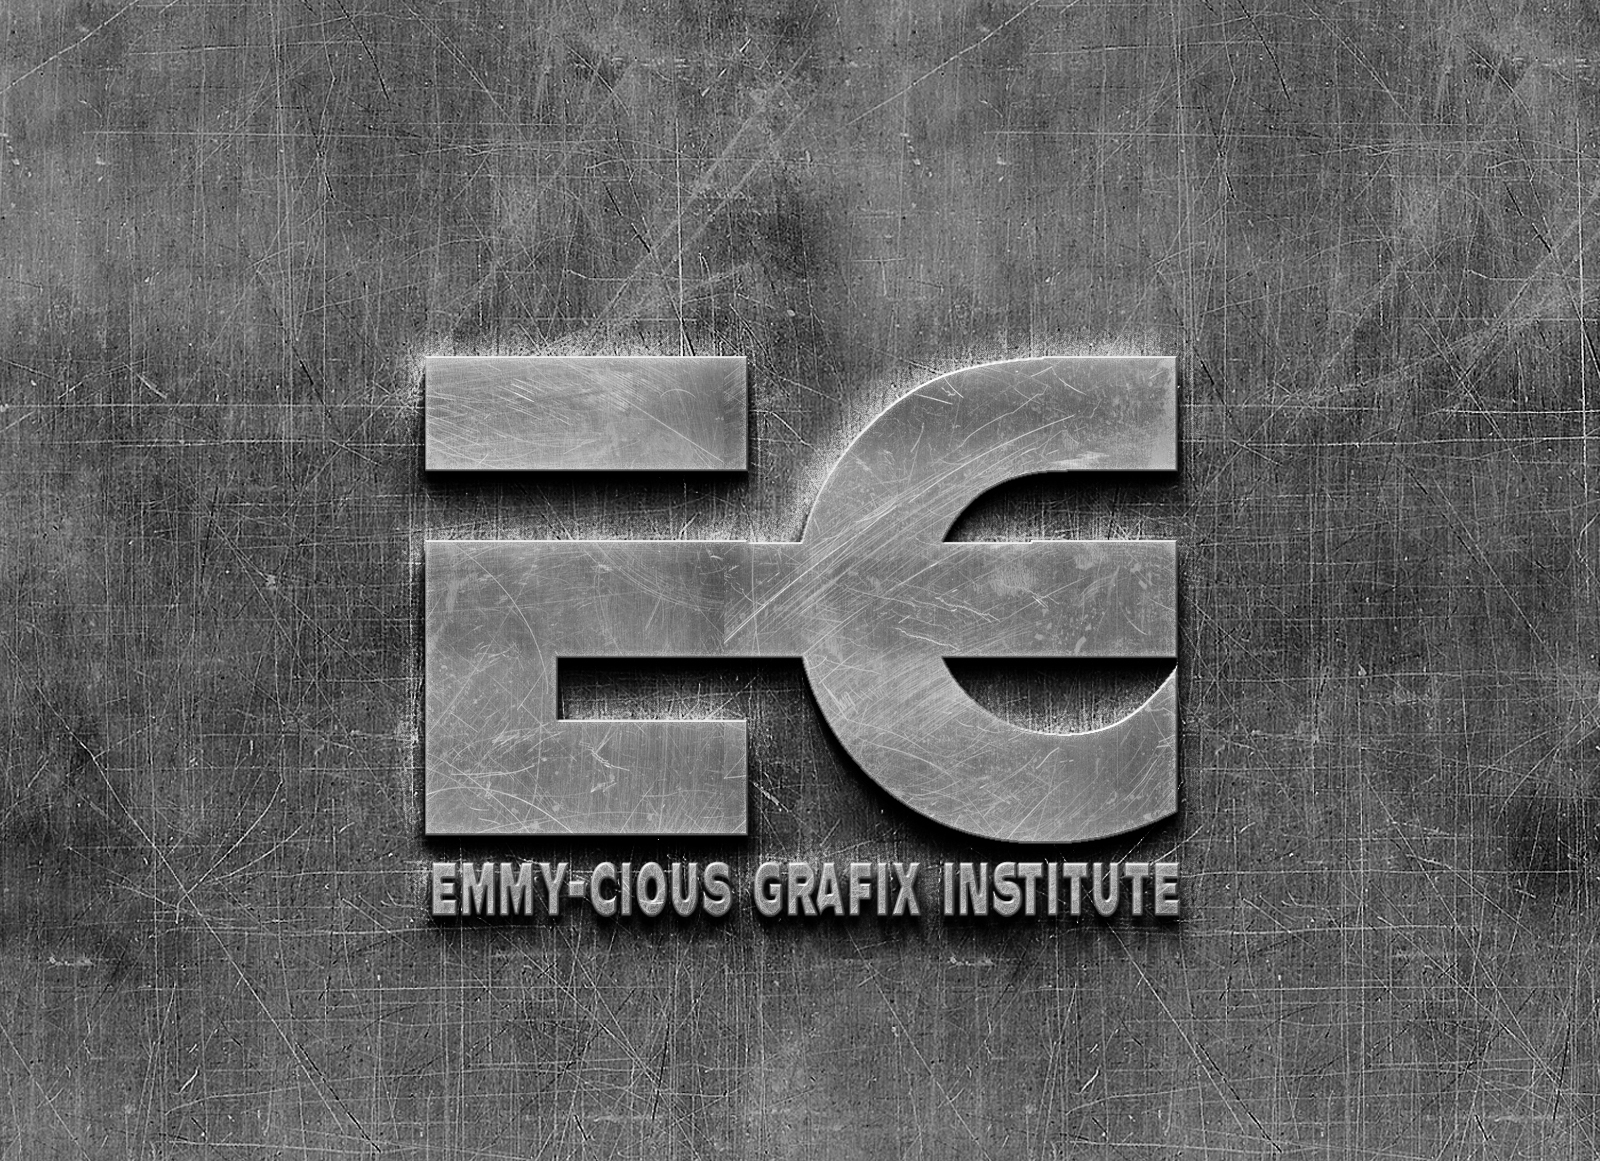 Emmy-cious Grafix institute provider